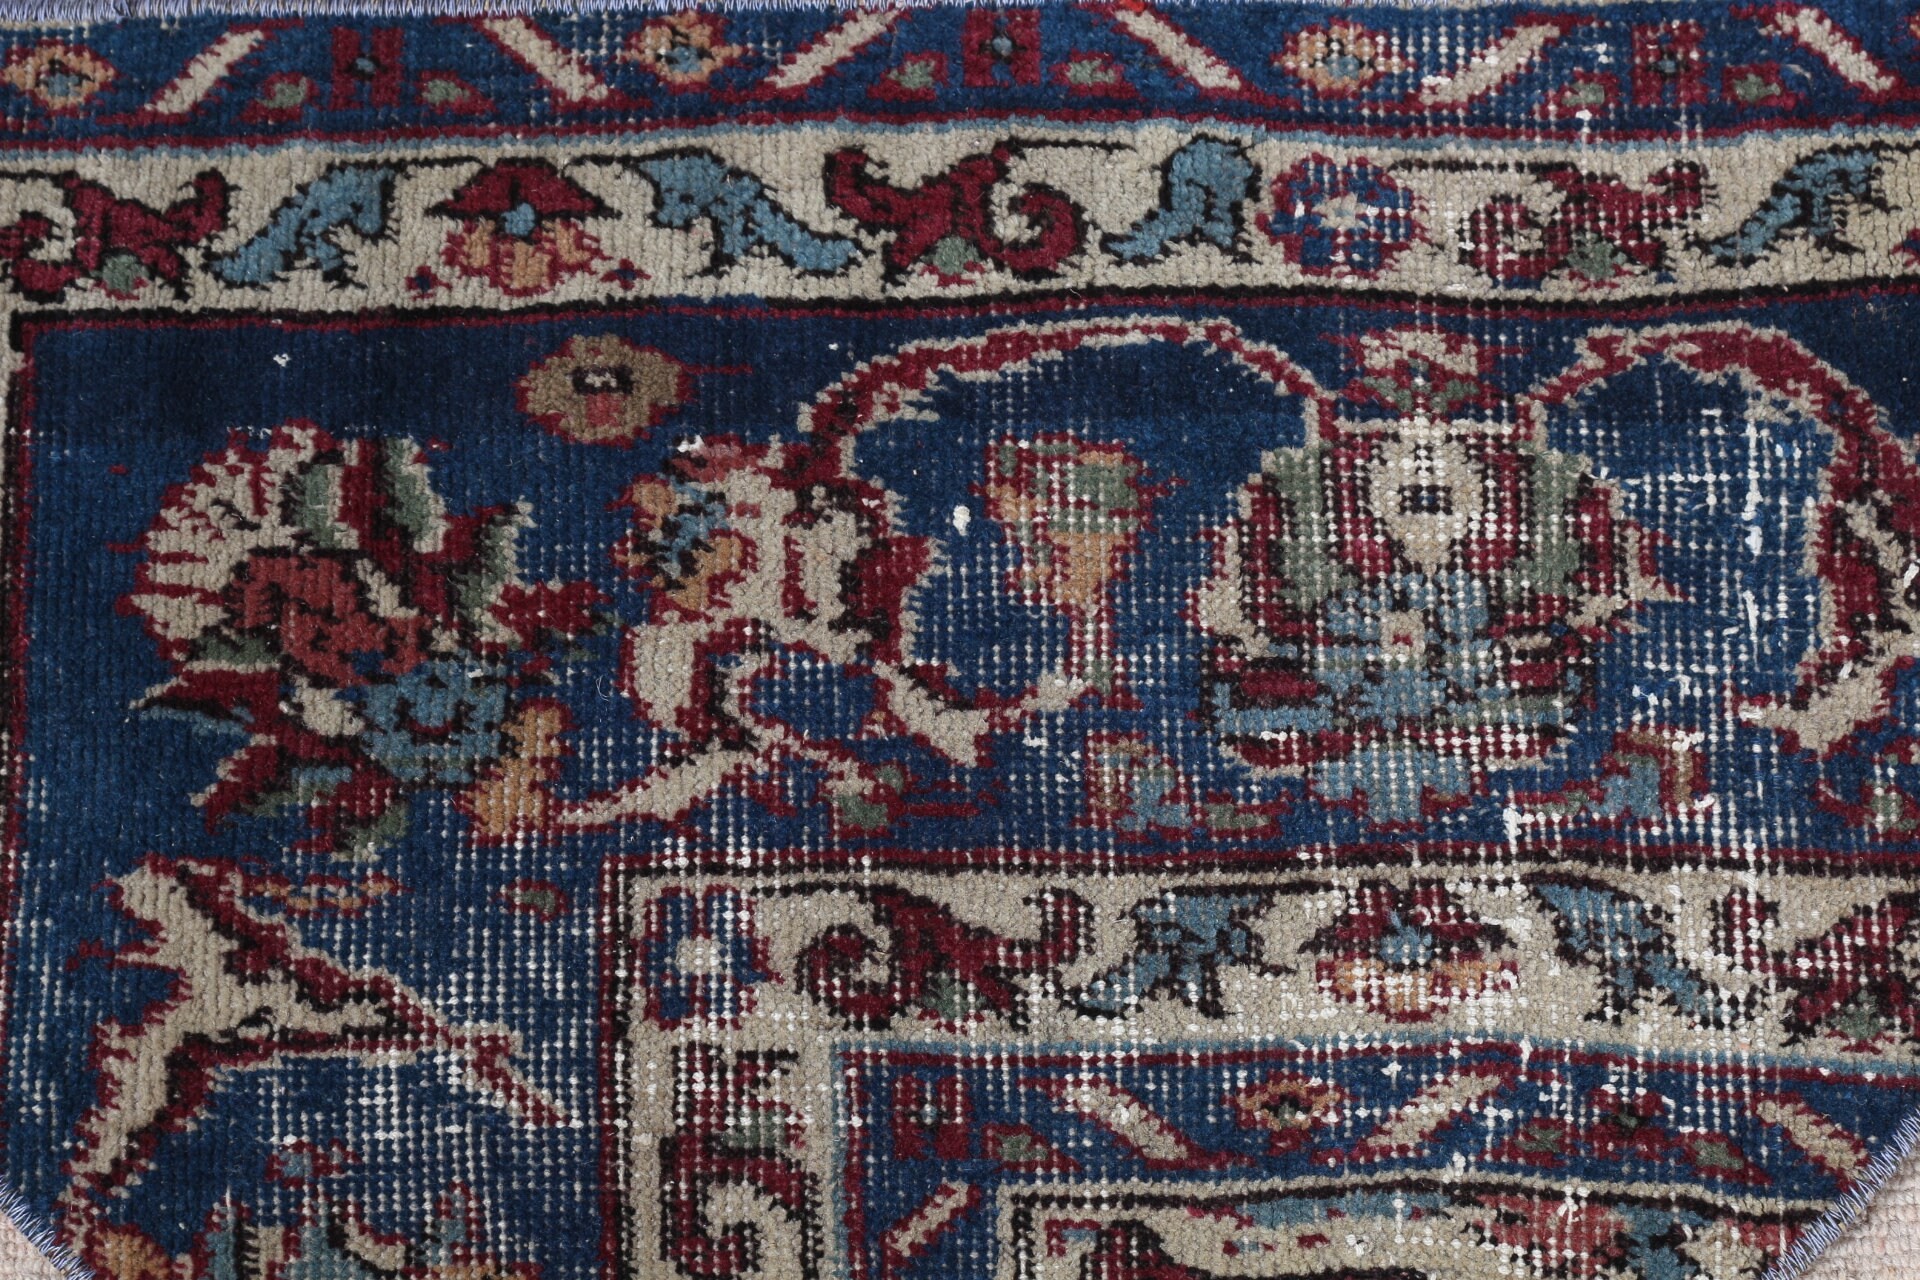 Oriental Rug, Bath Rug, Antique Rug, Bathroom Rug, Art Rugs, Turkish Rugs, Blue Kitchen Rugs, Old Rugs, Vintage Rug, 2.5x1.5 ft Small Rugs